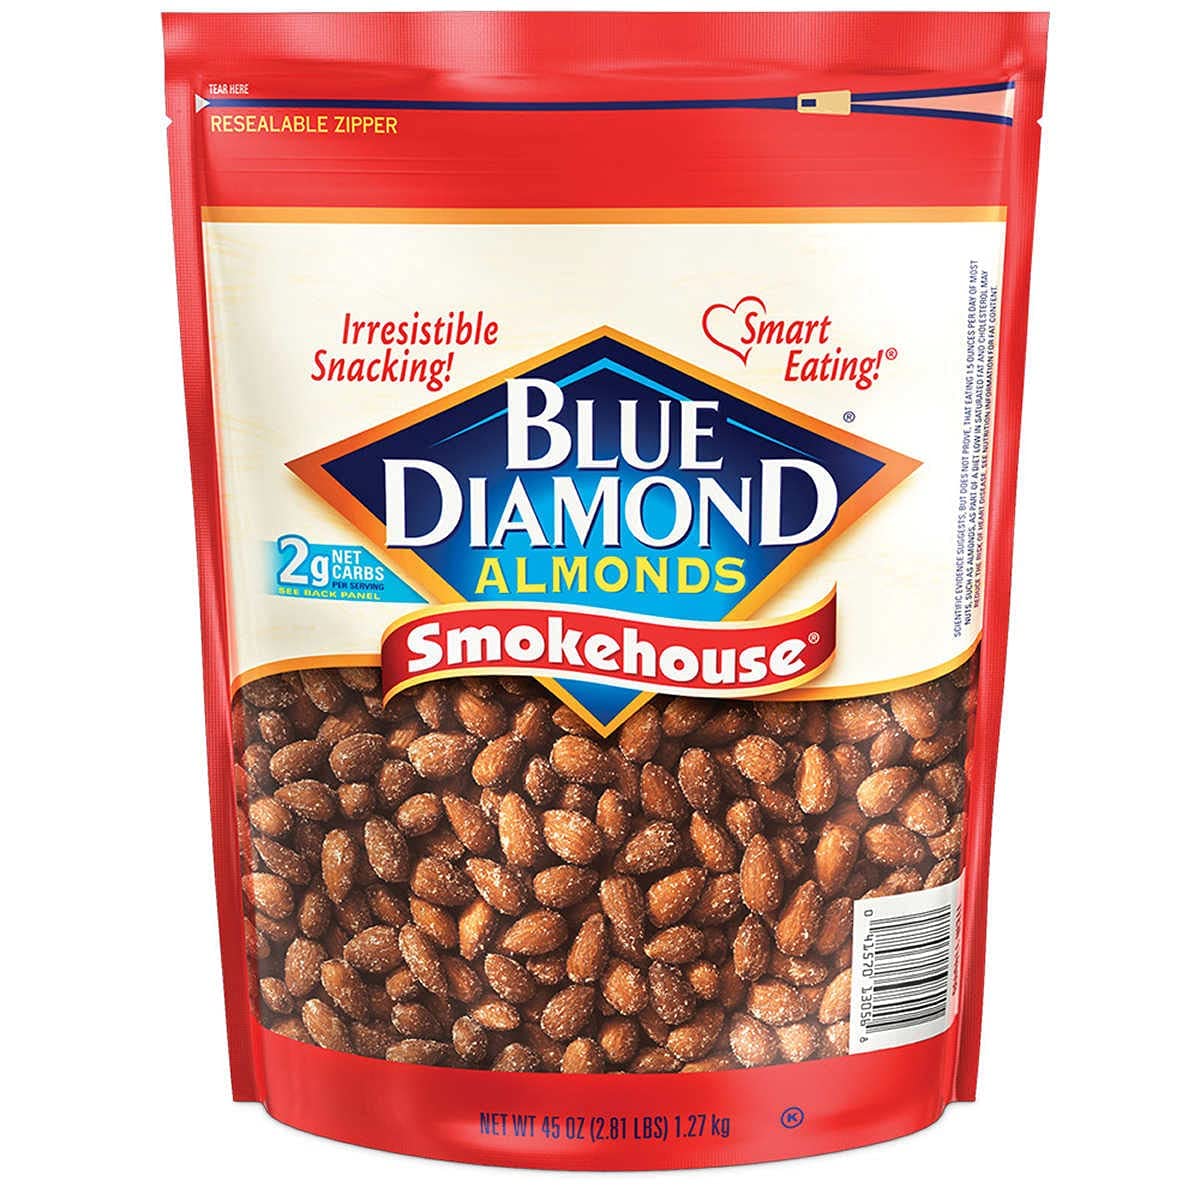 Blue Diamond Almonds, Smokehouse, 45 oz